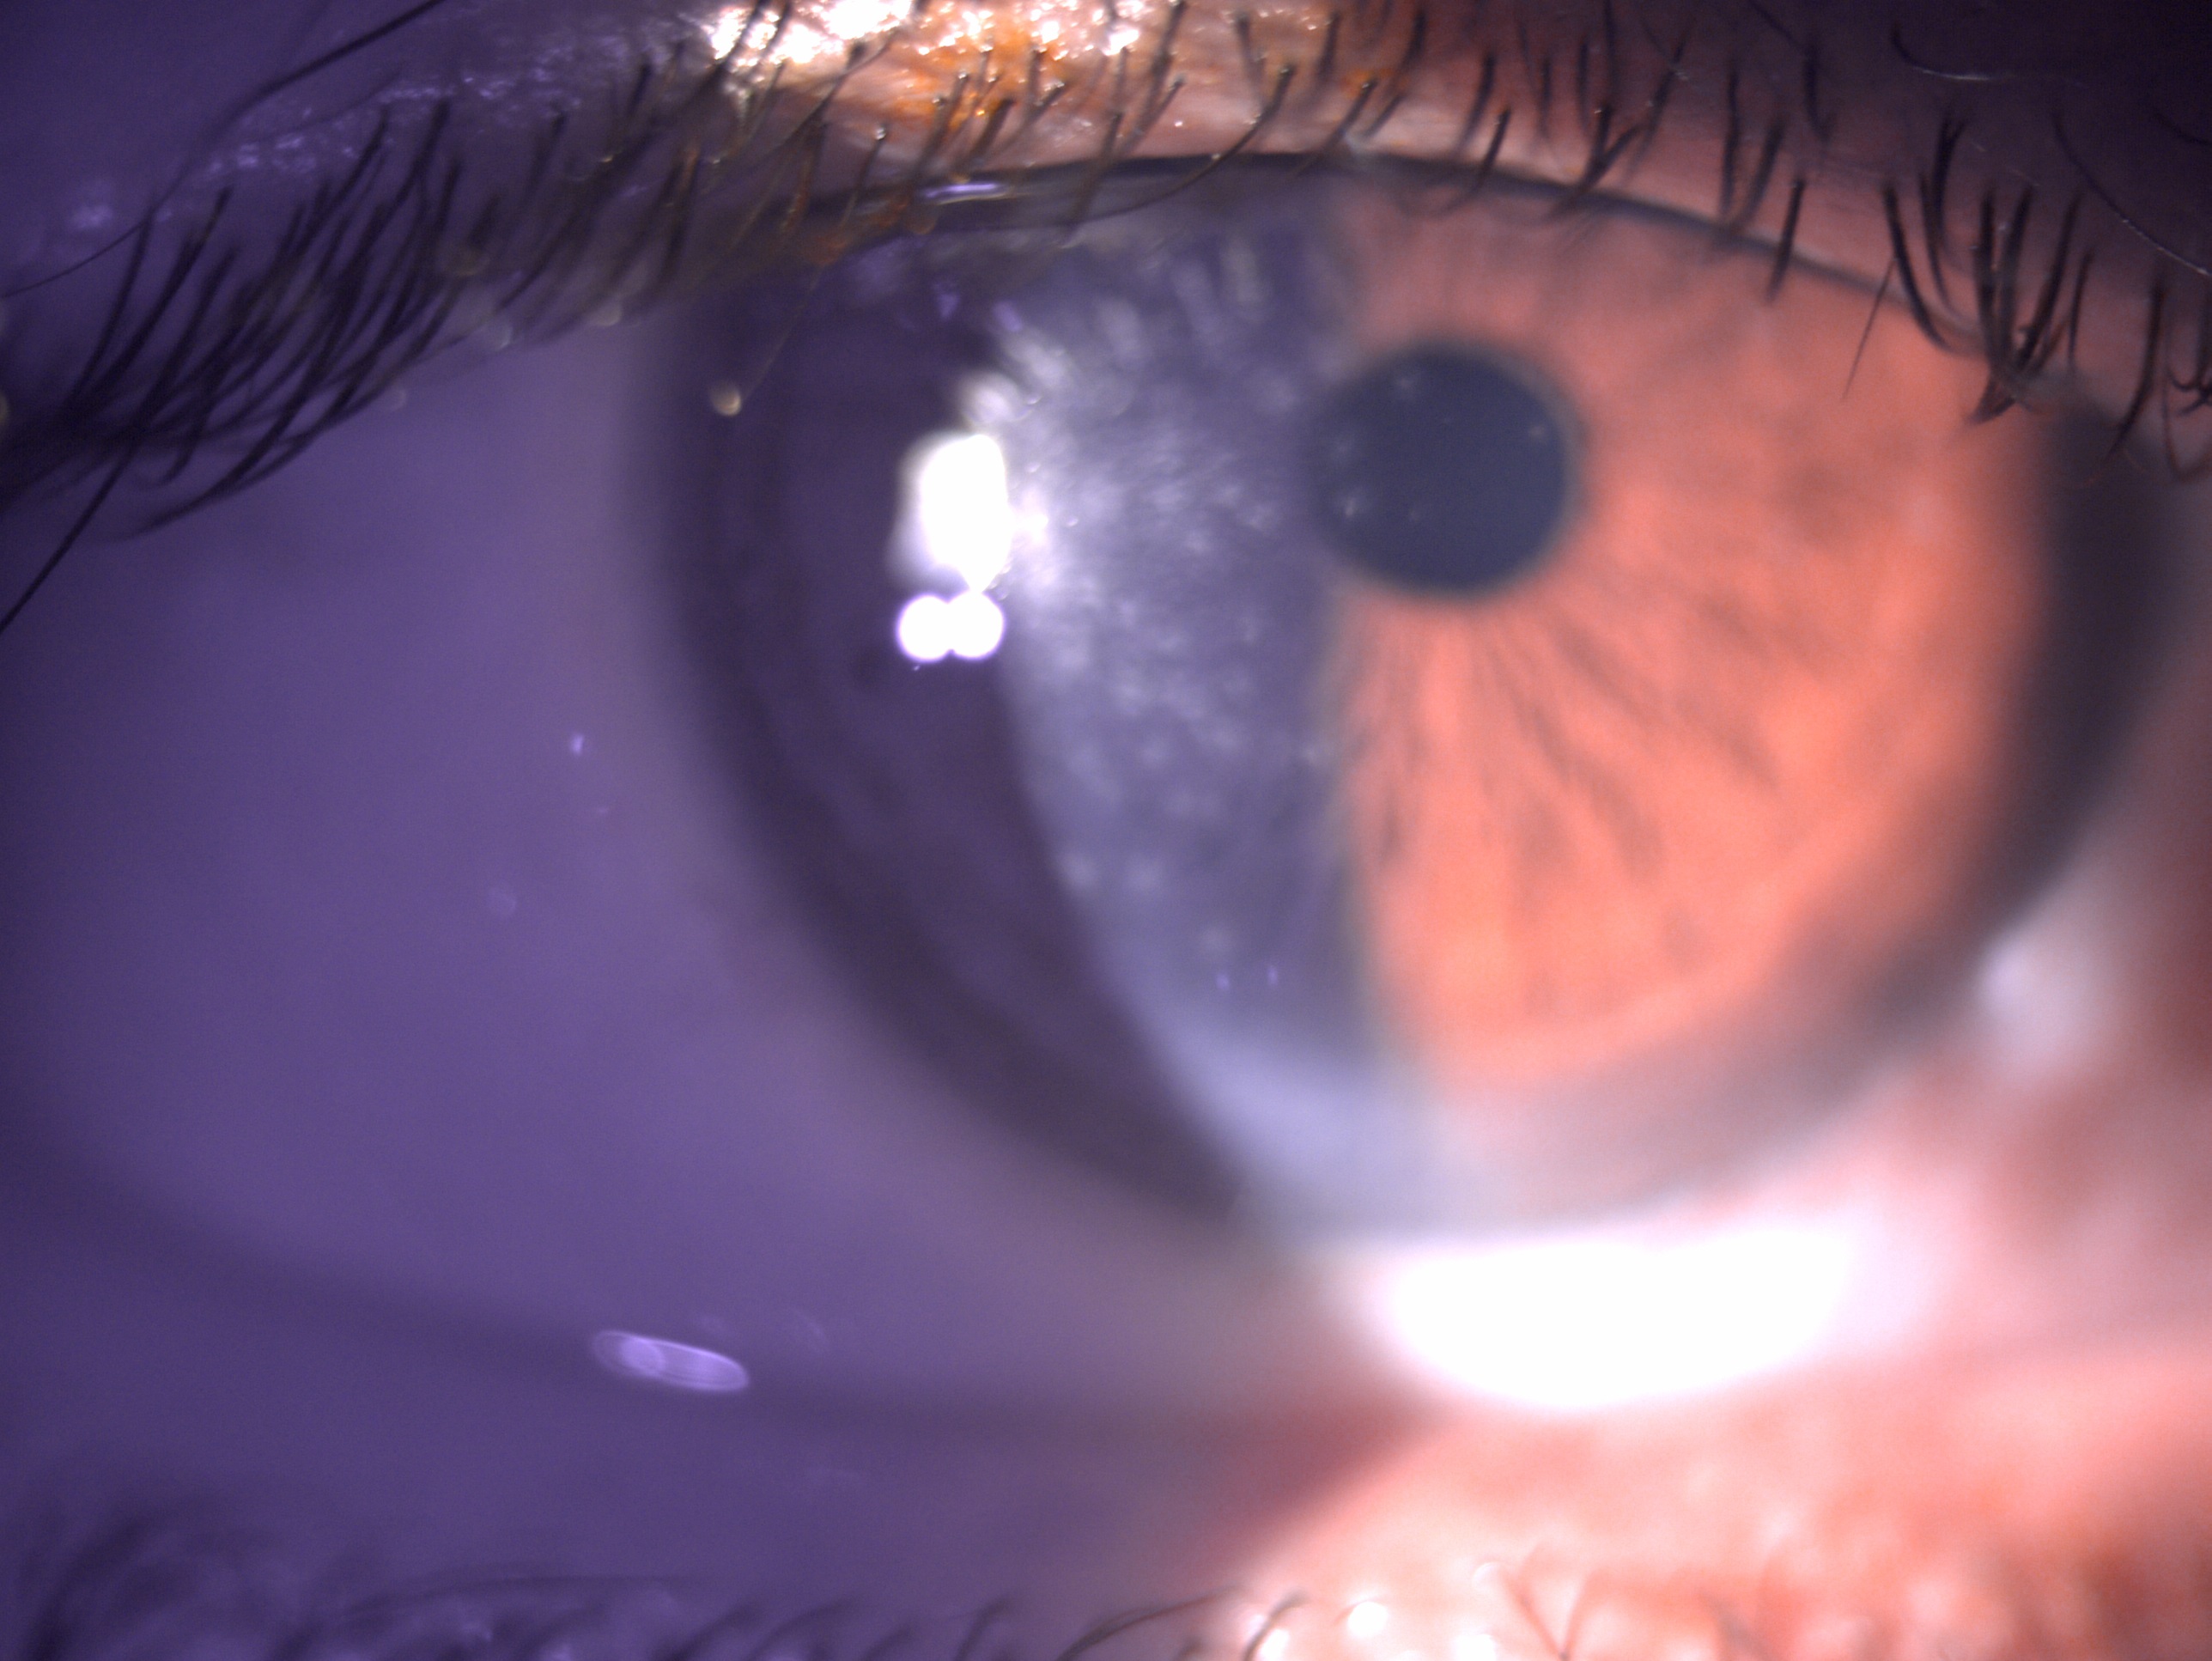 Digital image depicting multiple subepithelial scars post viral keratitis causing astigmatism